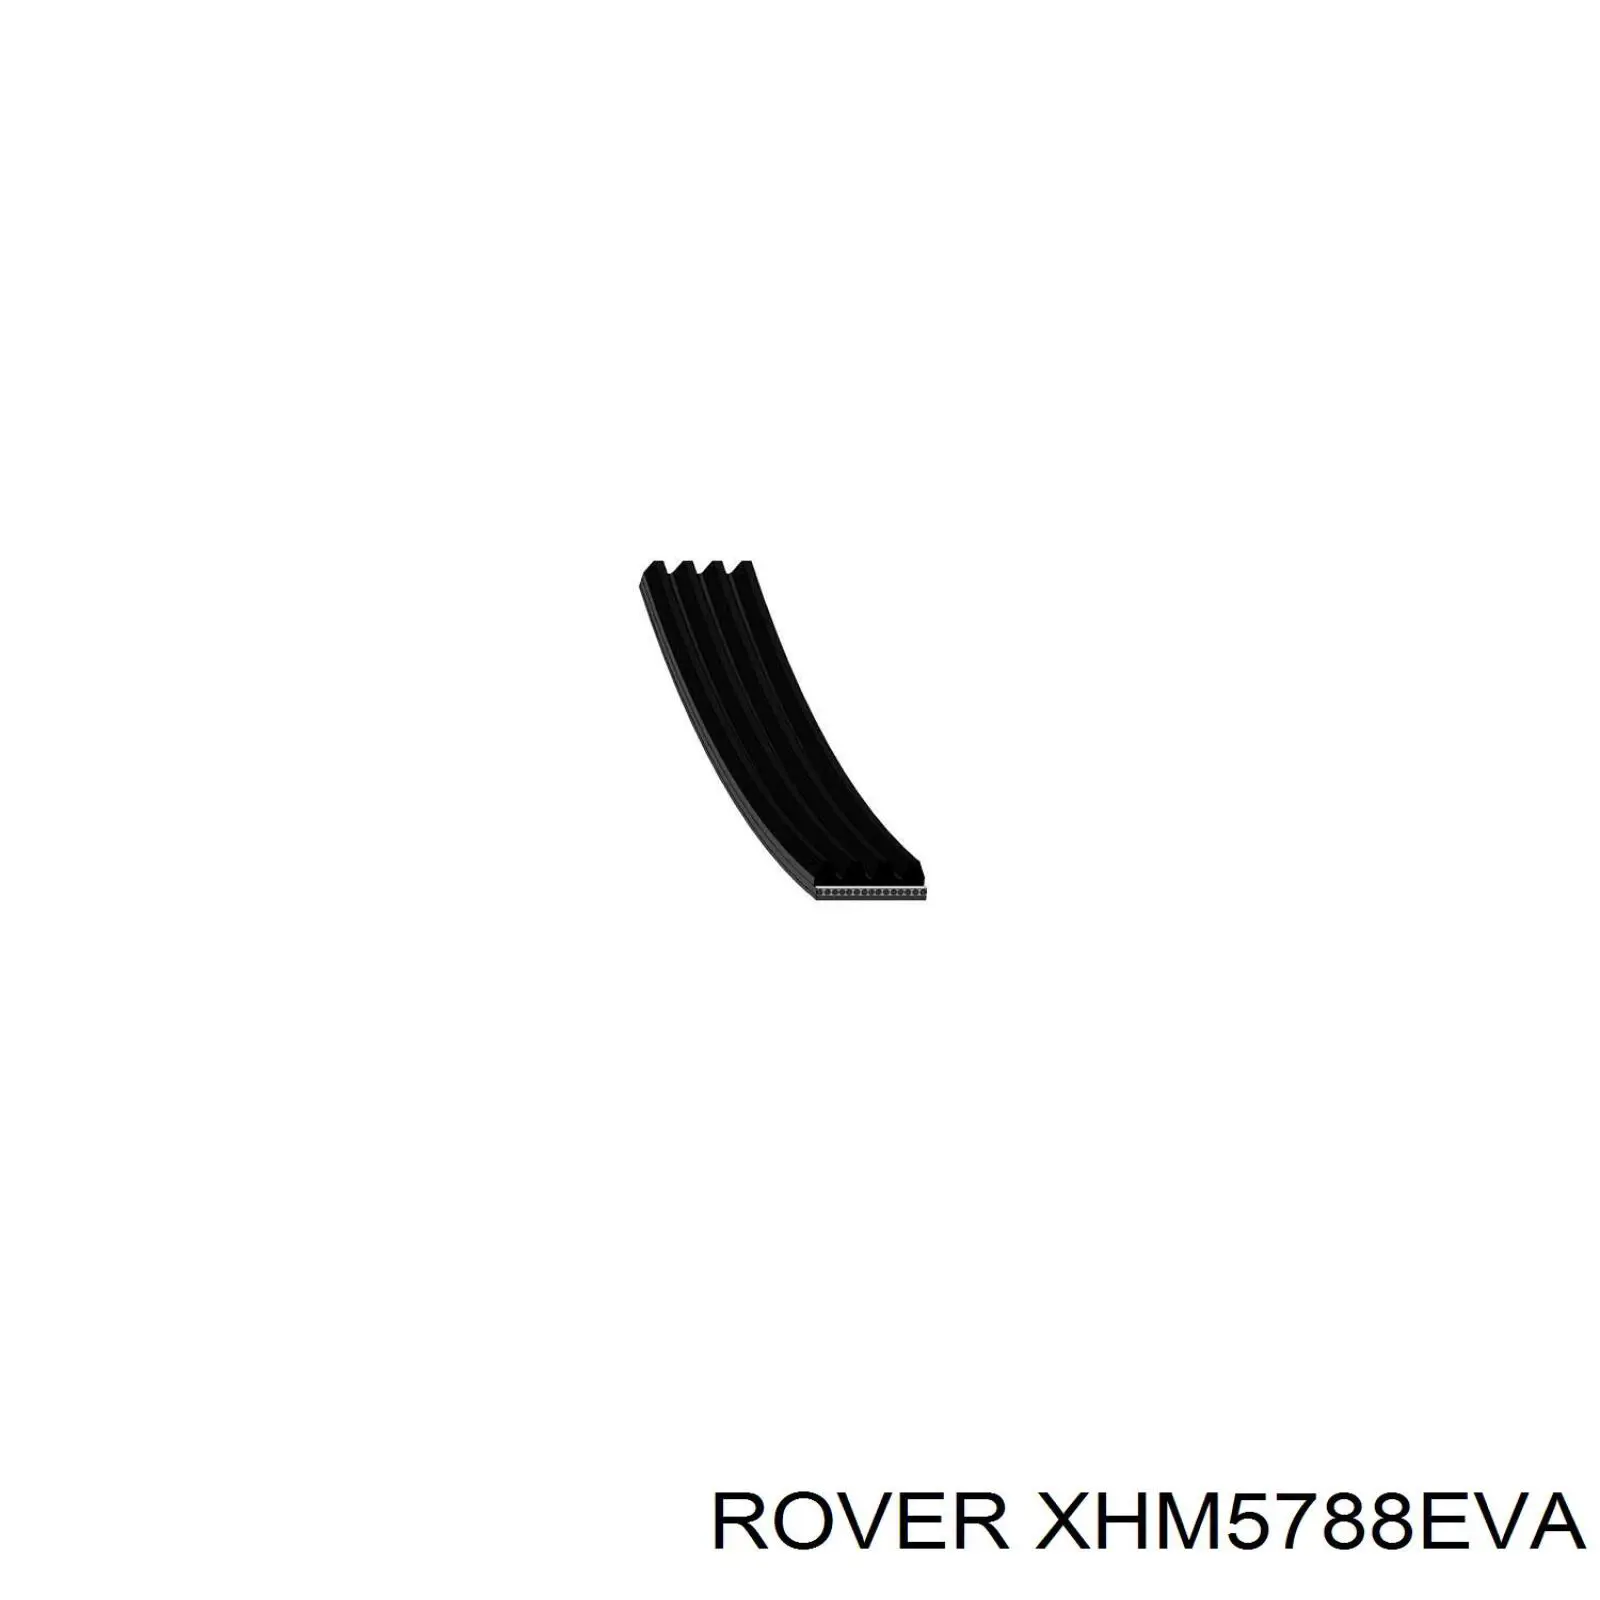 XHM5788EVA Rover correa trapezoidal